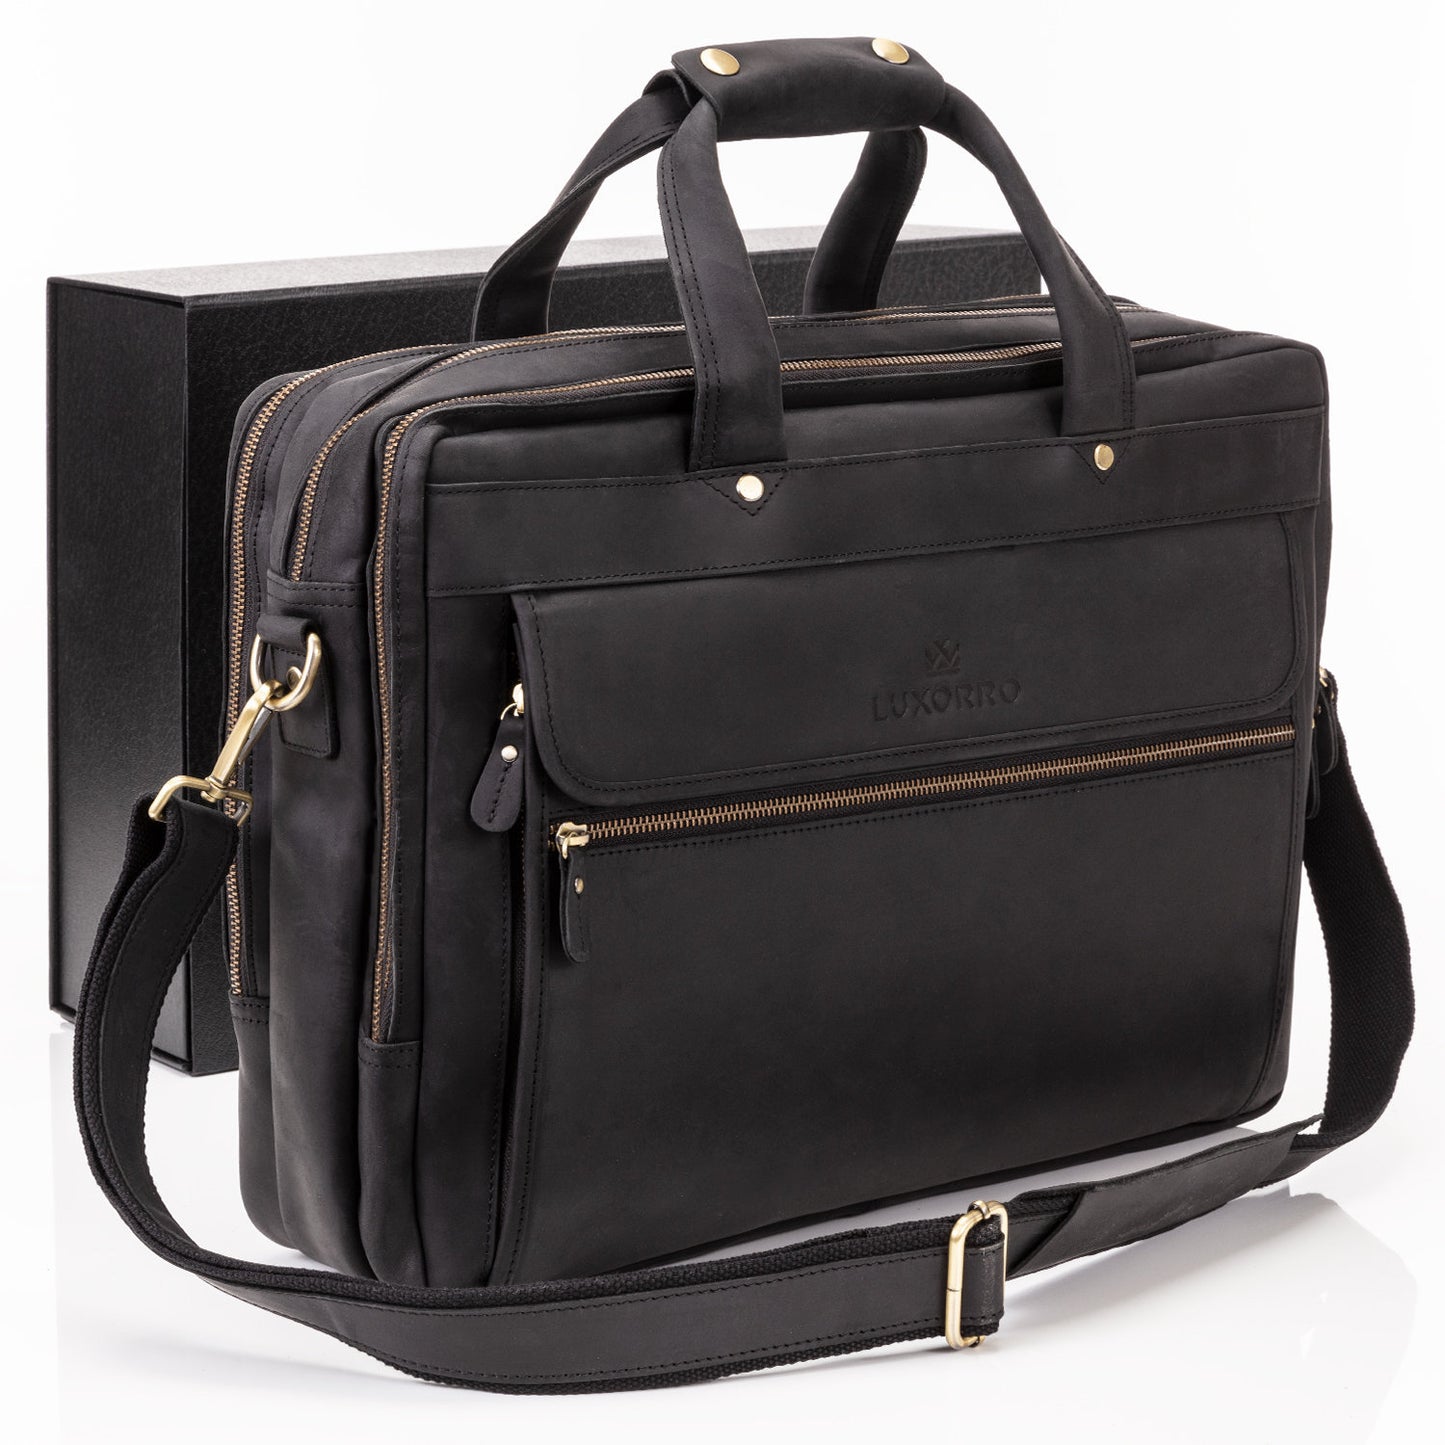 Luxorro Leather Briefcase Laptop Bag for Men – Soft, Leather Messenger Bag, Last's a Lifetime – Lifetime Warranty – Fits 14-Inch, Black - Luxorro